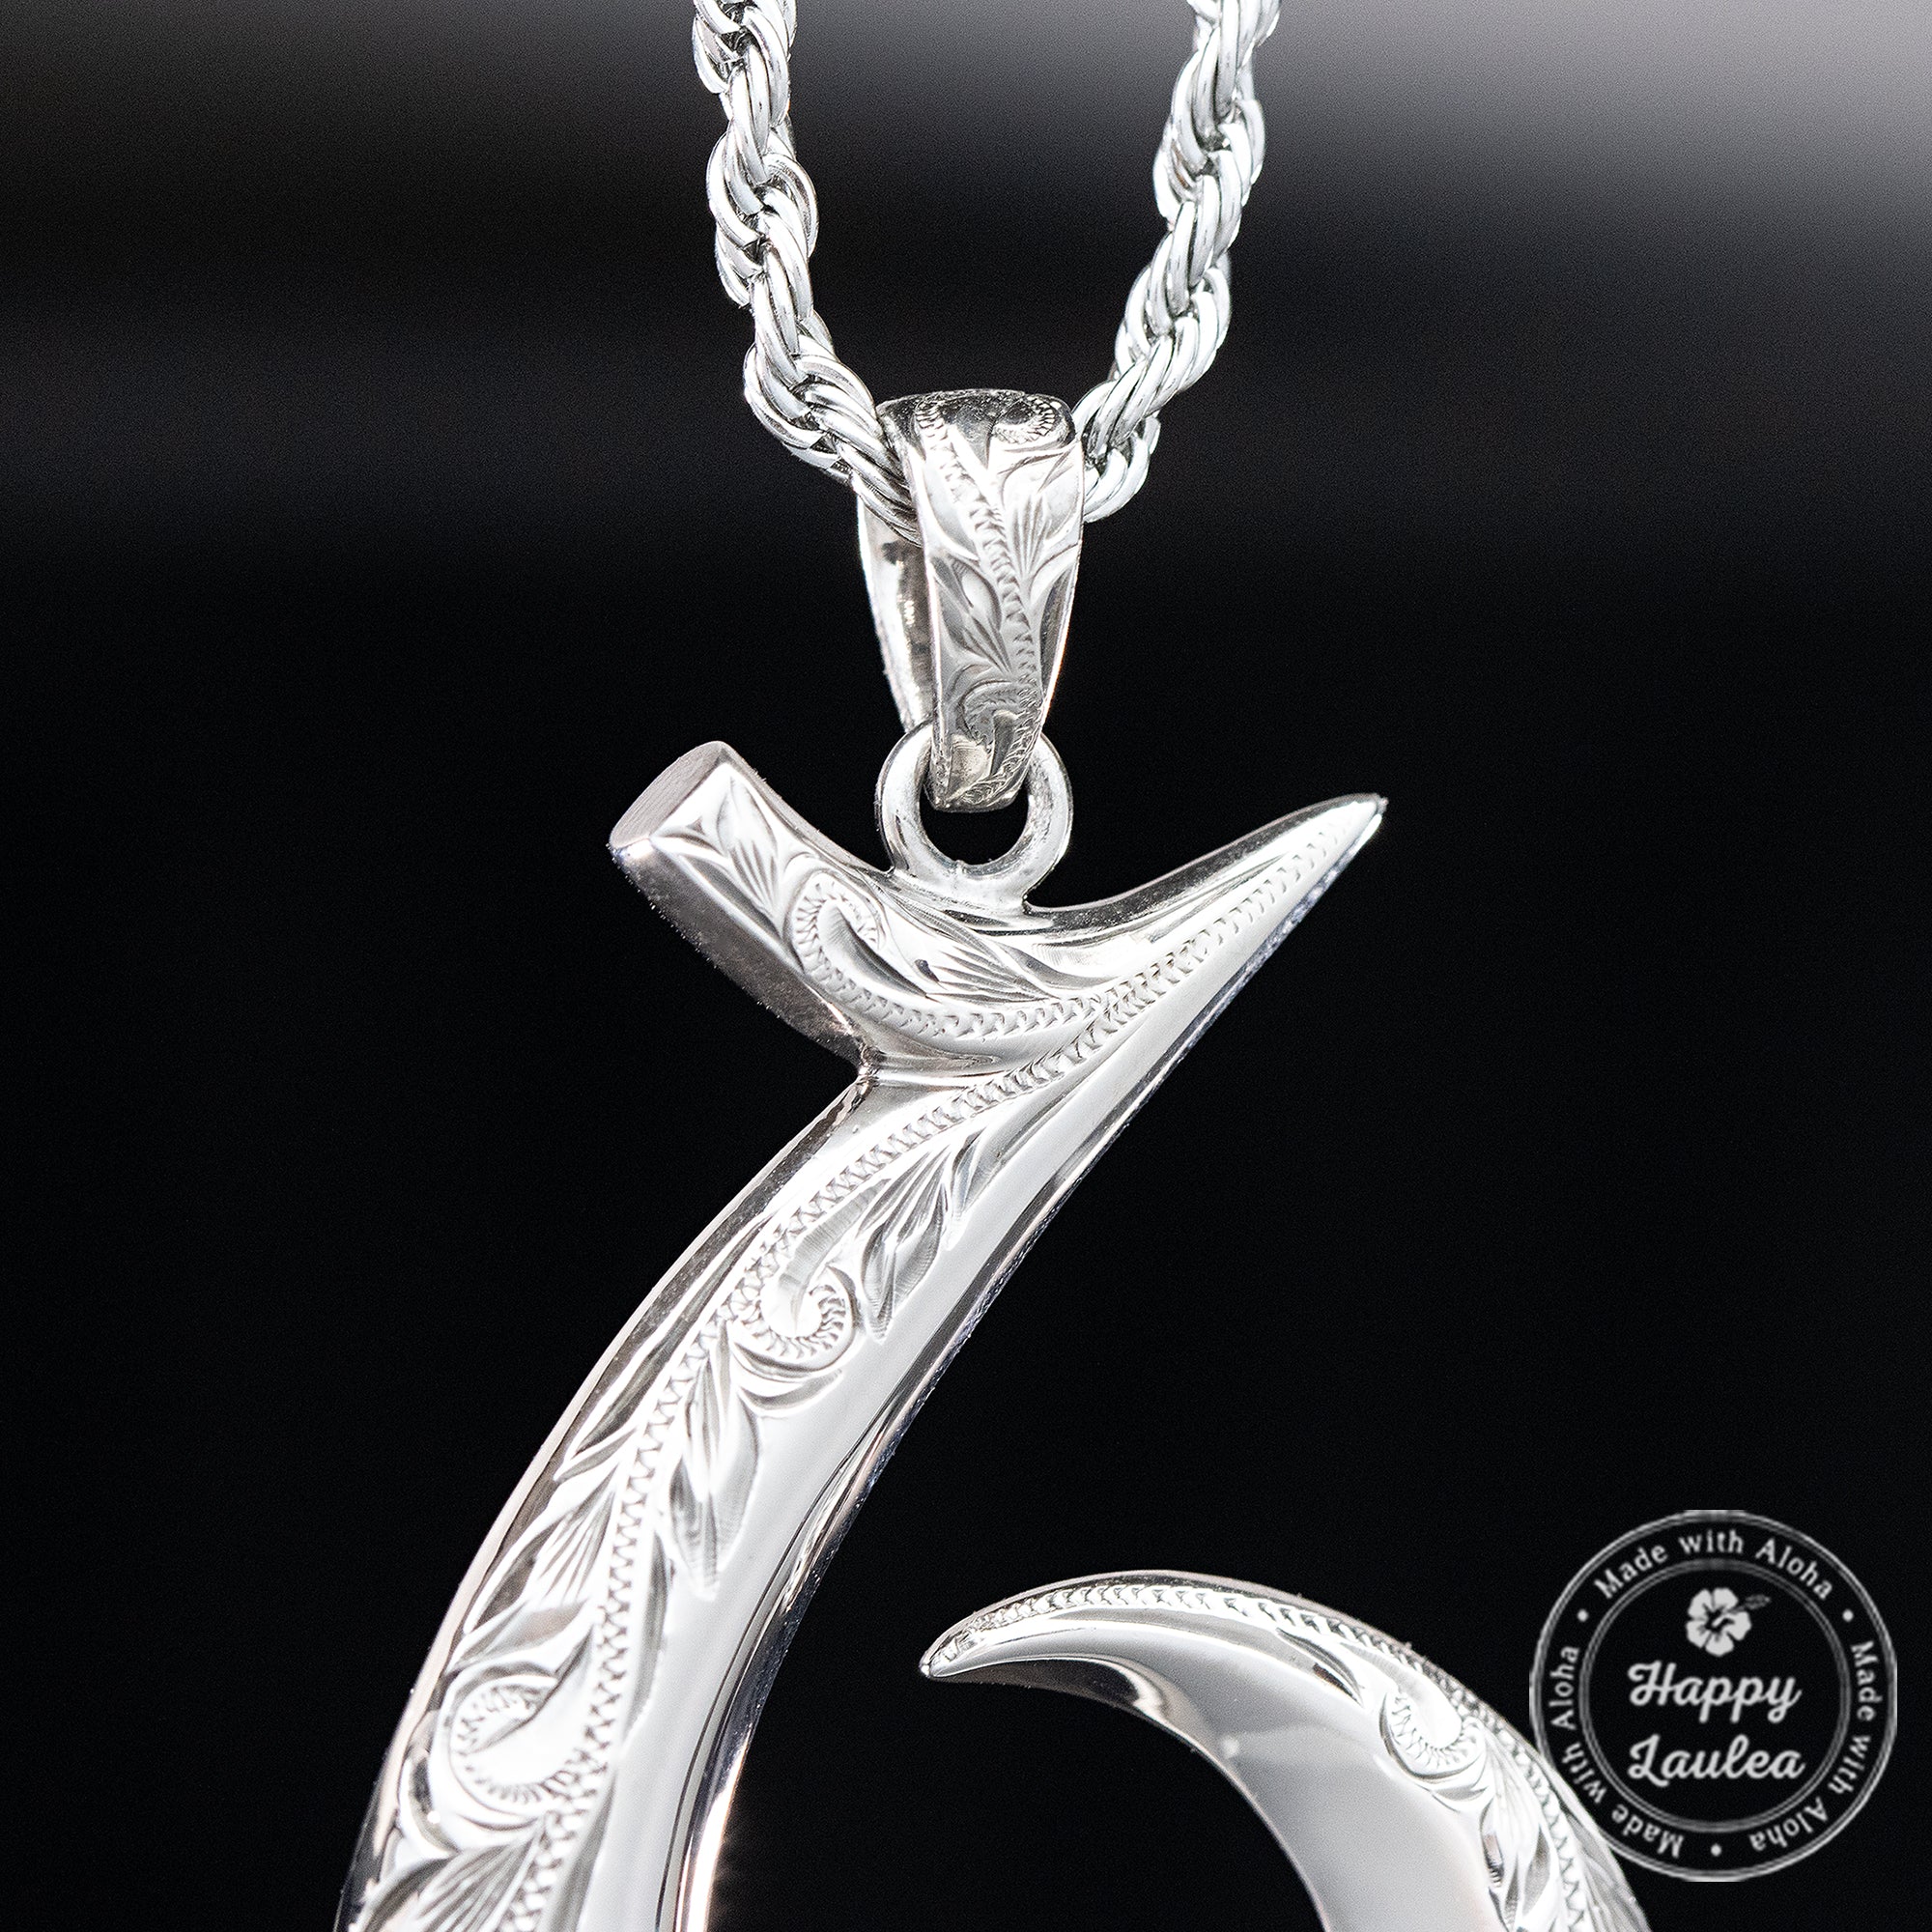 Solid Hawaiian Koa Wood Sterling Silver Fish Hook 'Makau' Necklace Pendant